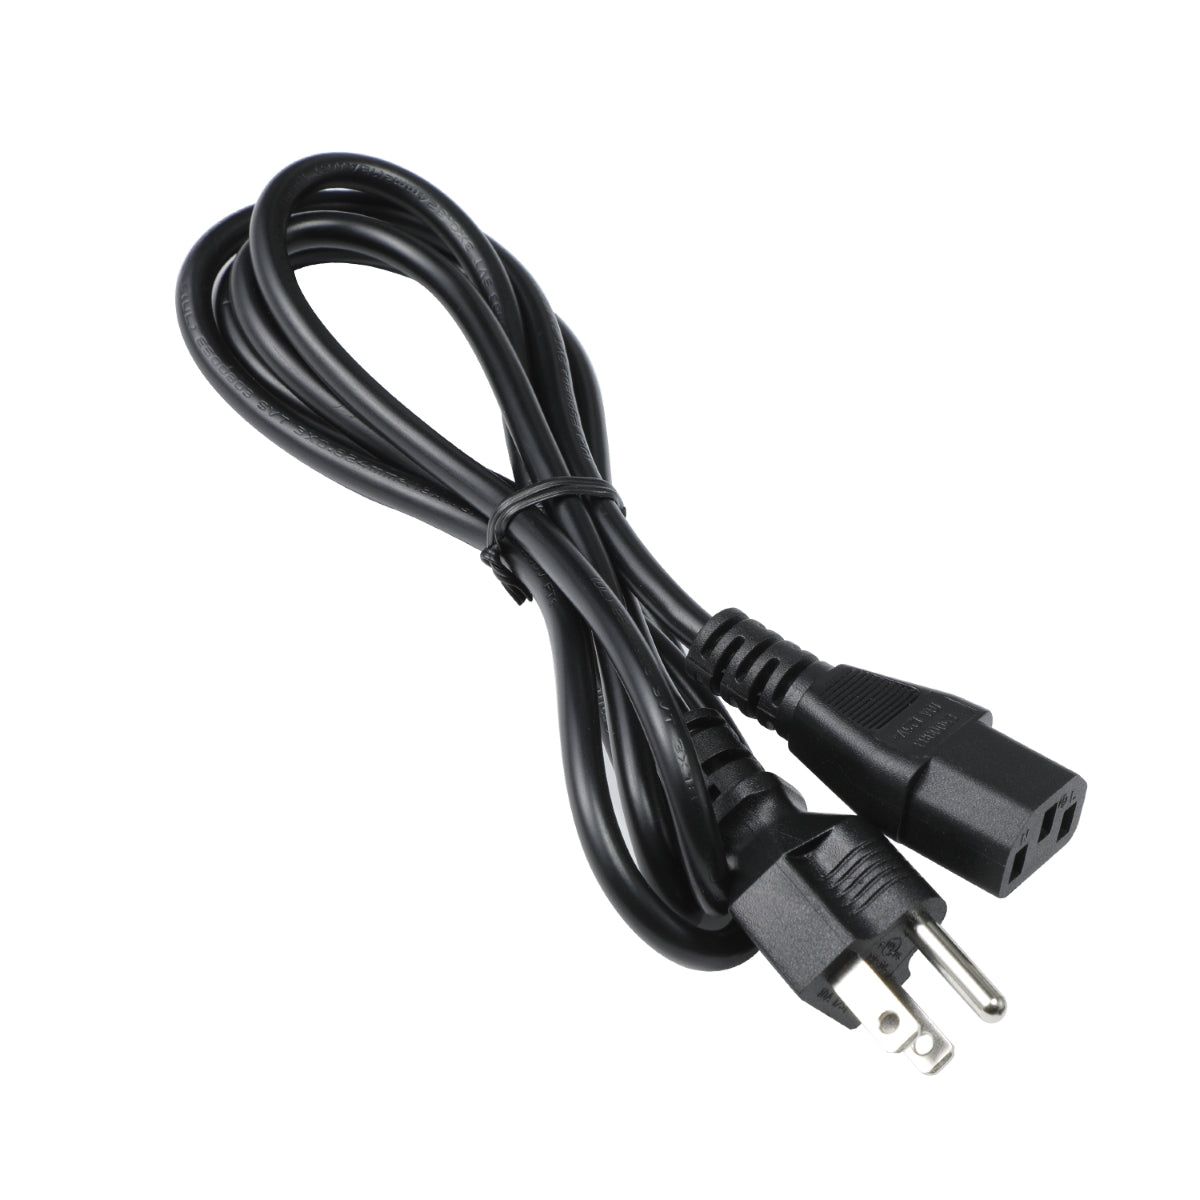 Power Cord for Dell U4320Q Monitor